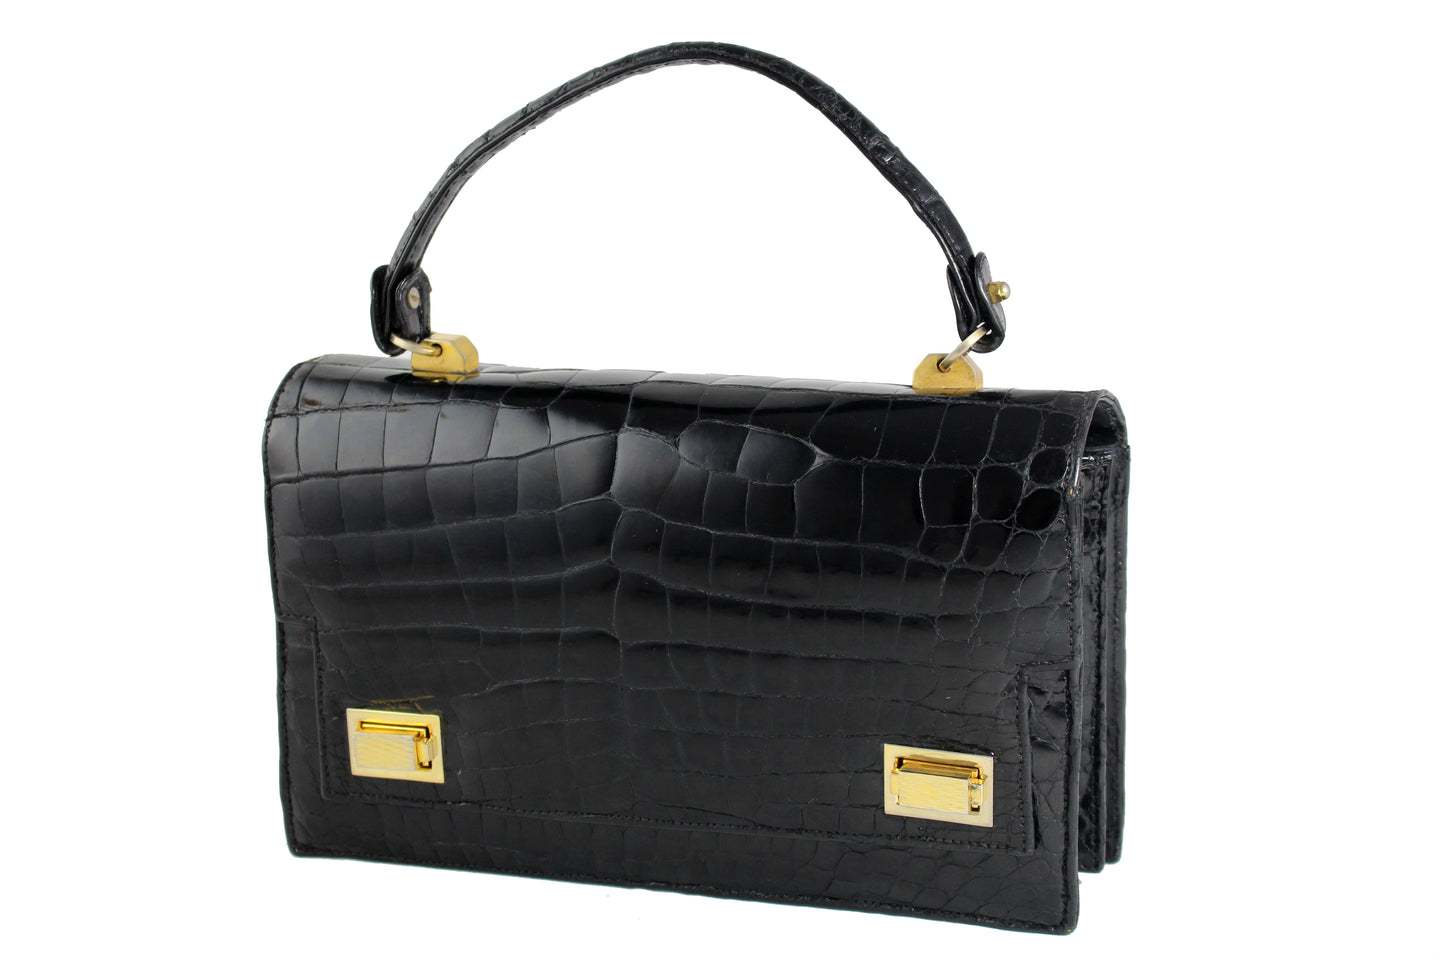 Jet black crocodile skin handbag with flap and double clasp